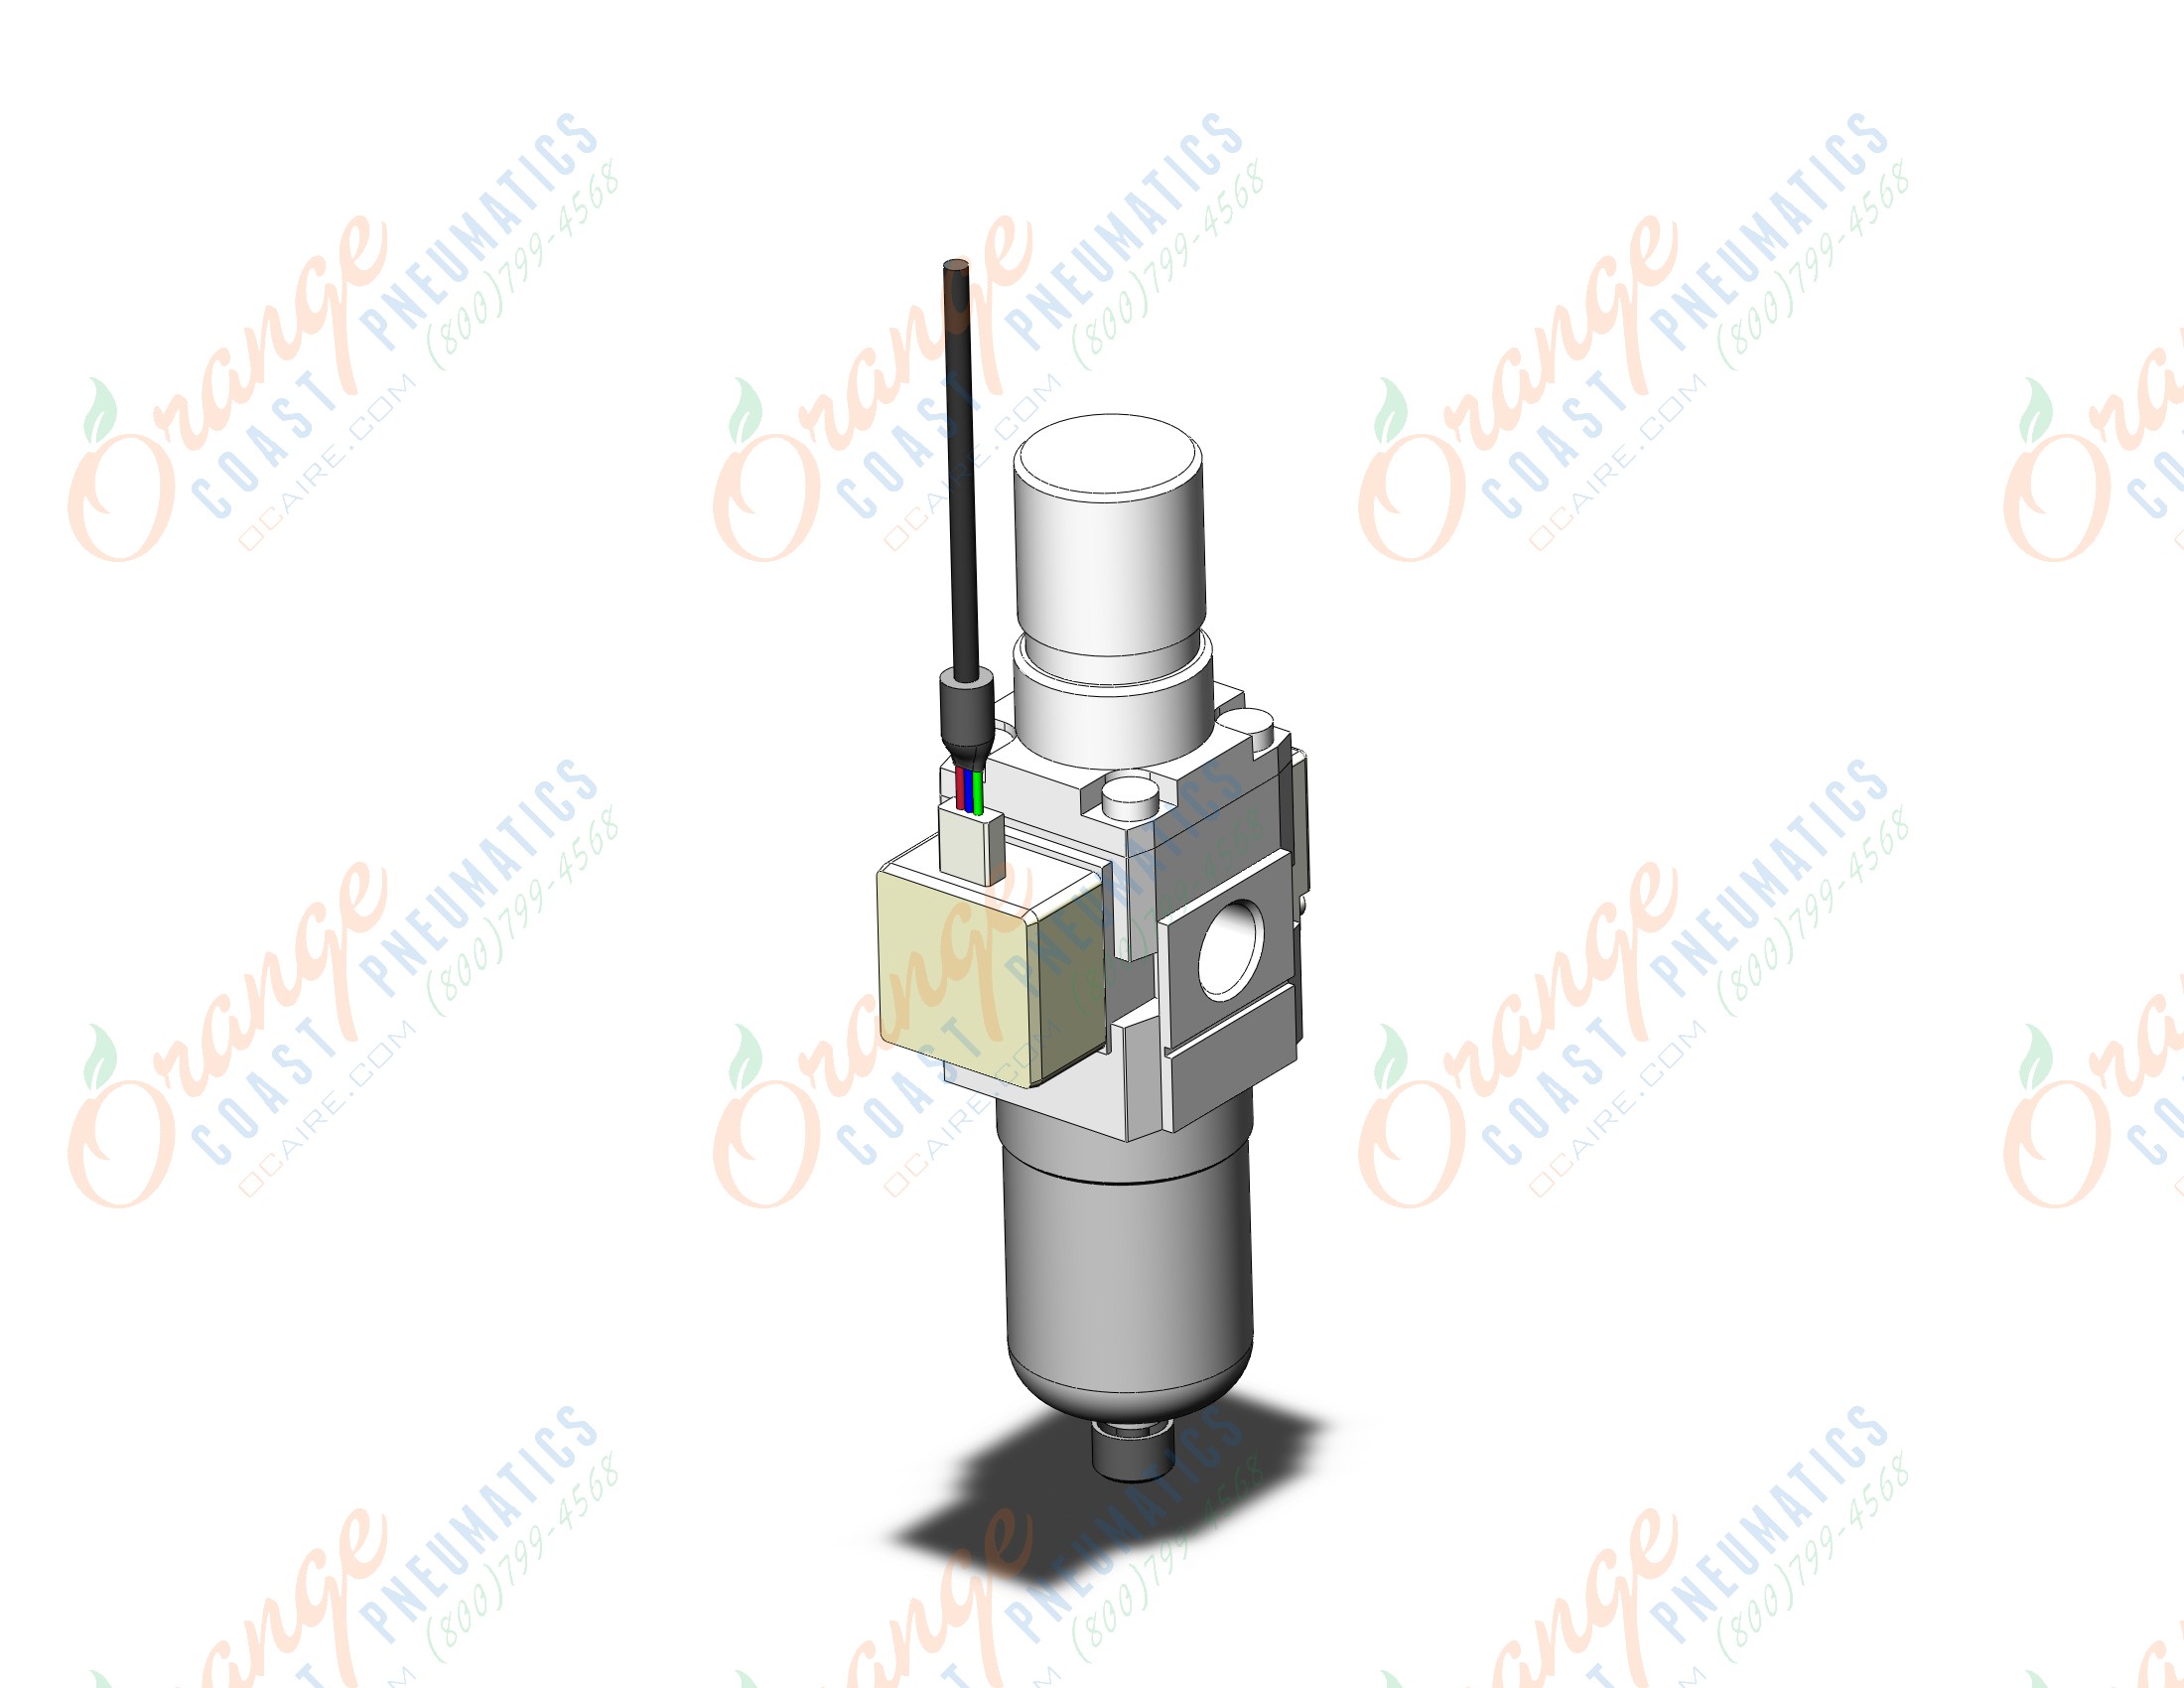 SMC AW20-F02E4-B filter/regulator, FILTER/REGULATOR, MODULAR F.R.L.